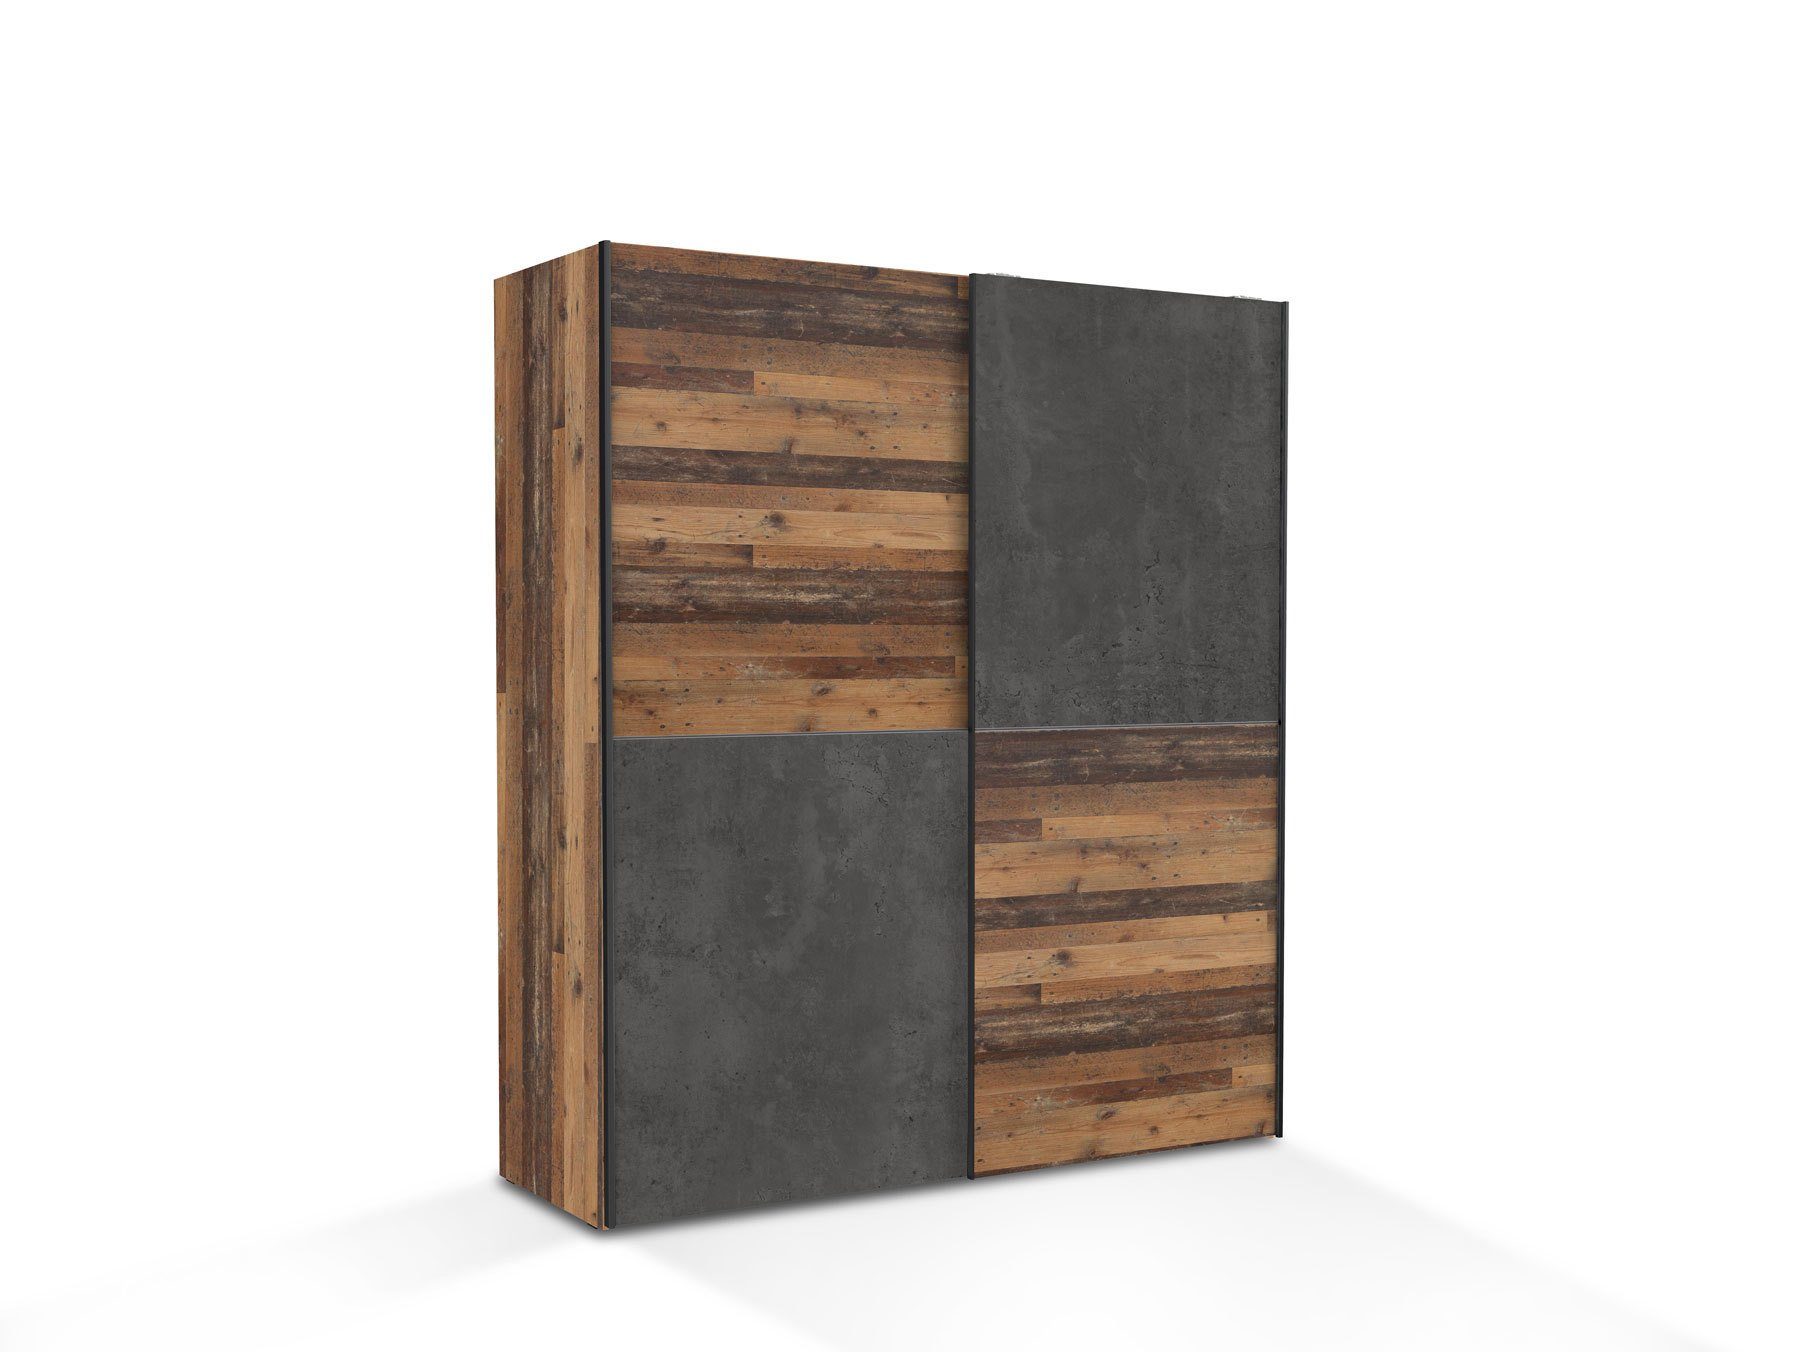 Dekorspanplatte, Wood DELKO vintagefarbig/dunkelgrau Schwebetürenschrank, Moebel-Eins Schiebetürenschrank Old Material